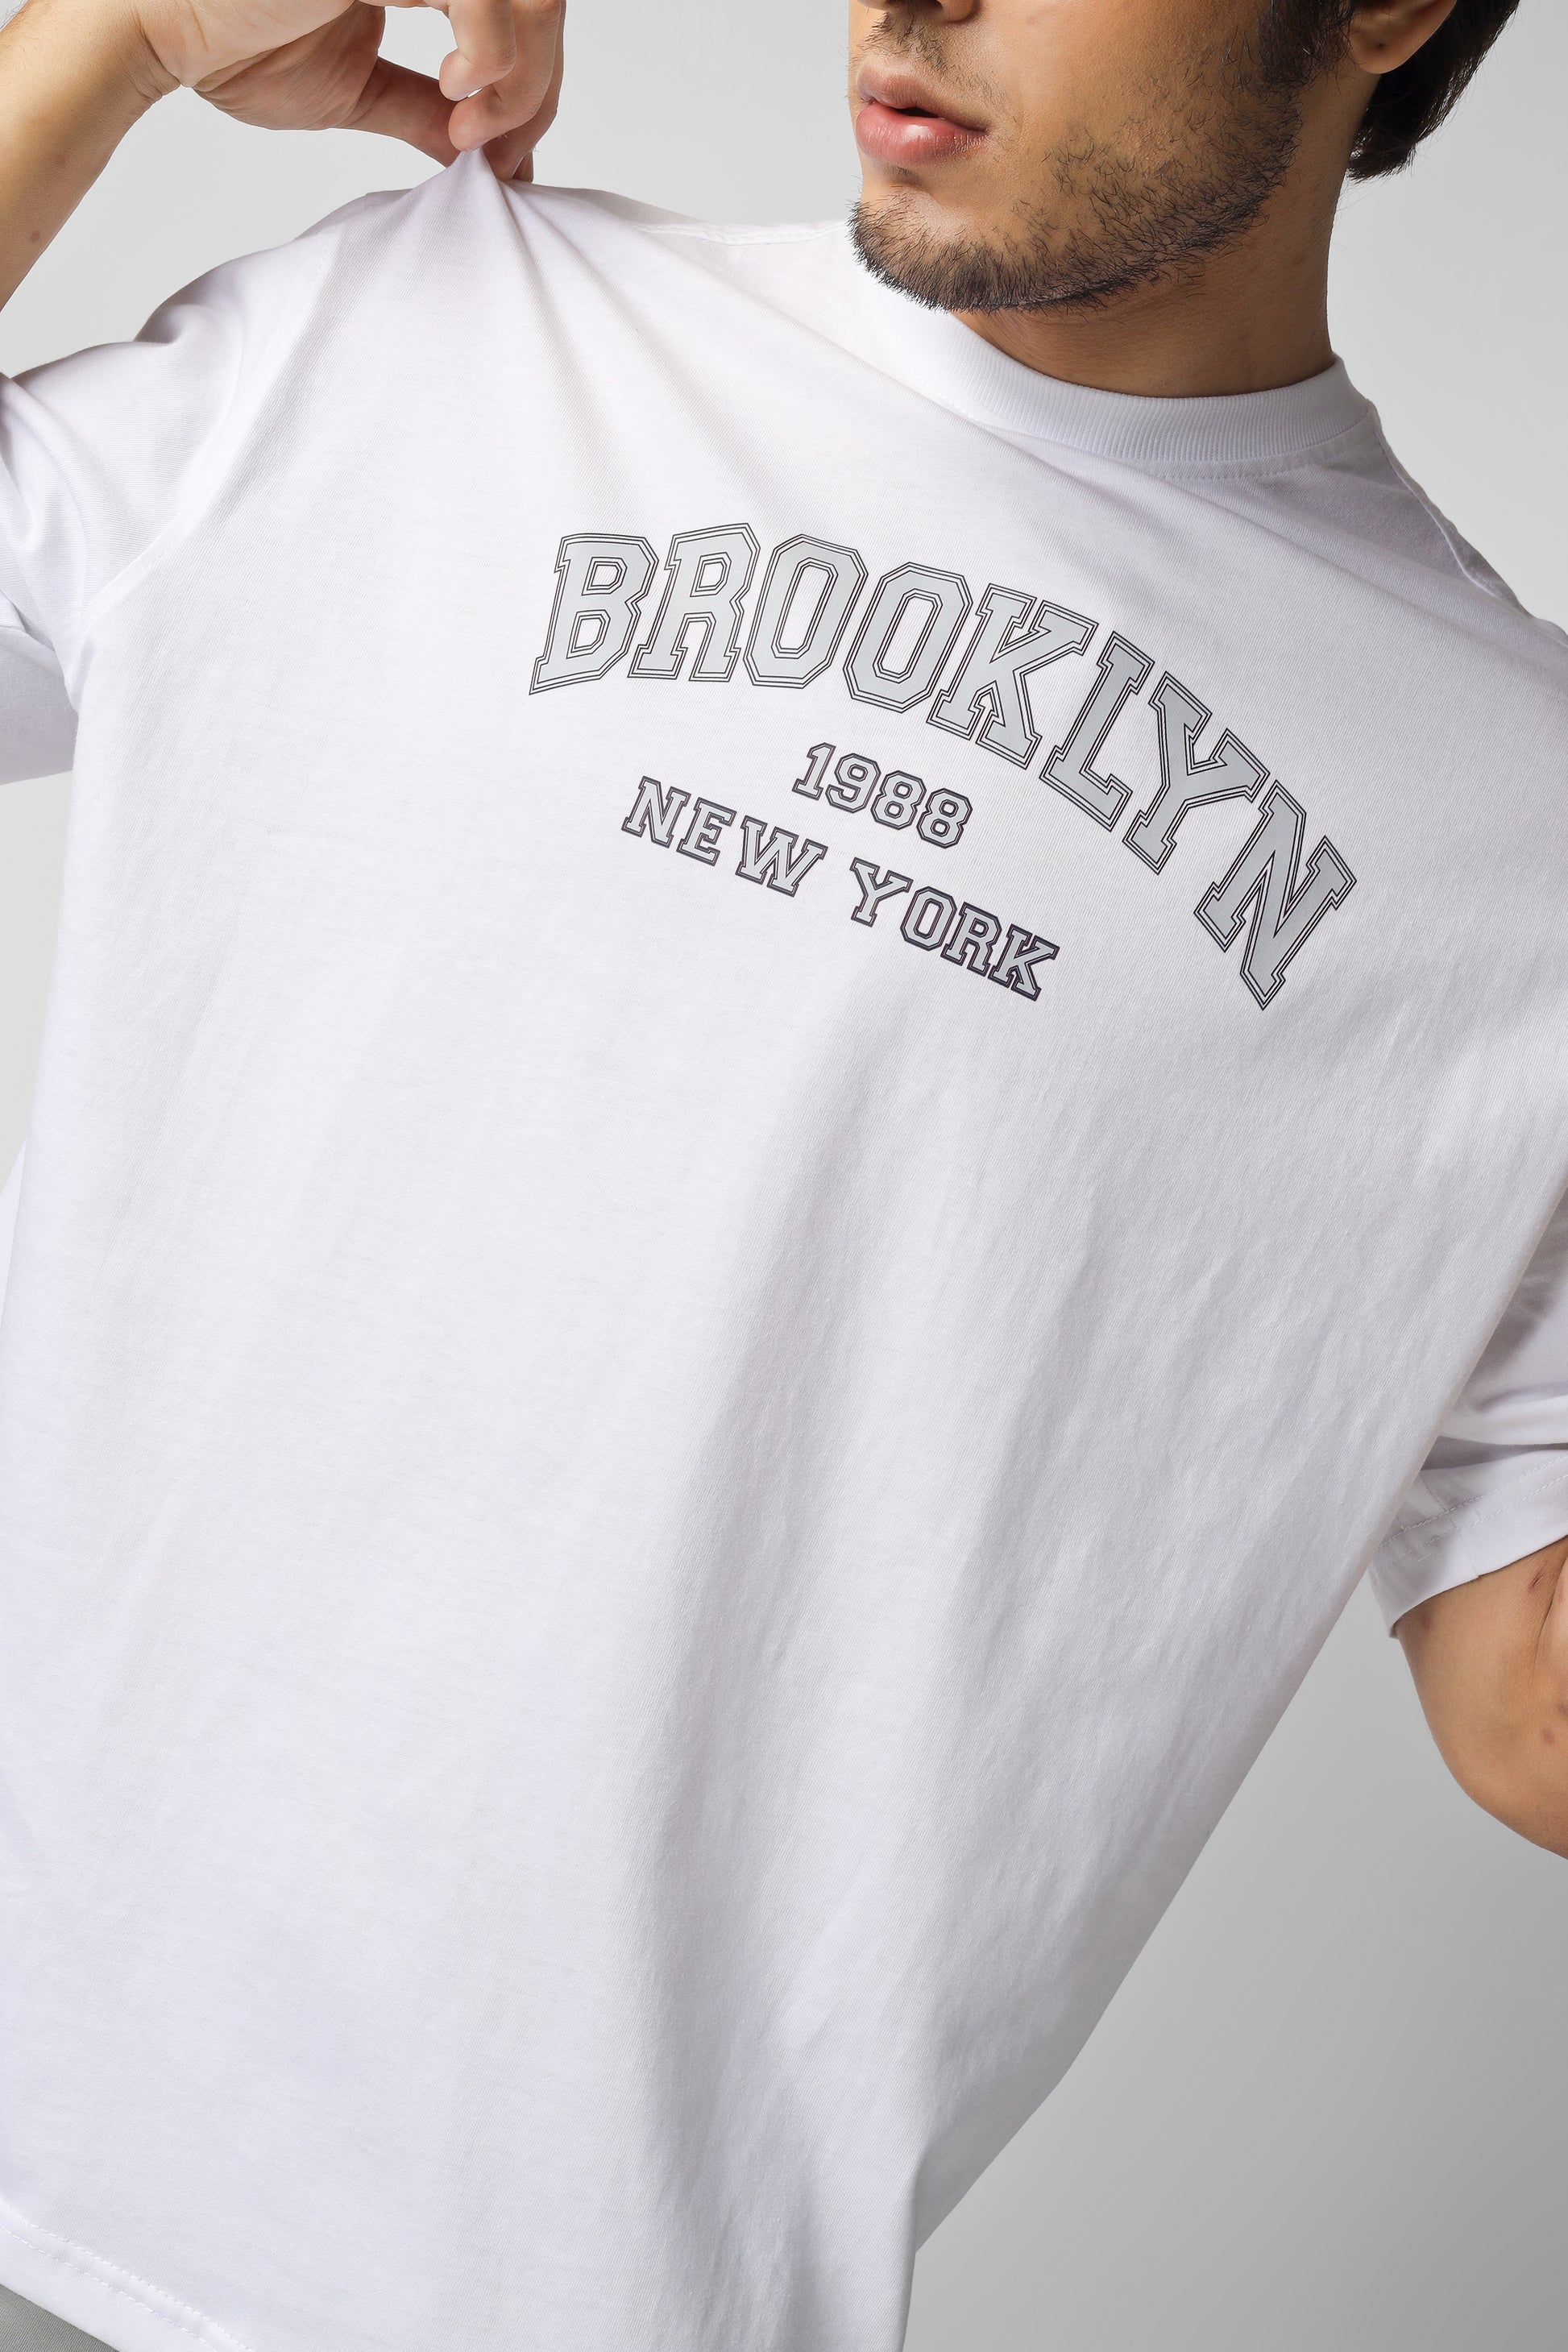 Brooklyn Co-Ord Set (White & Grey) - Wearduds